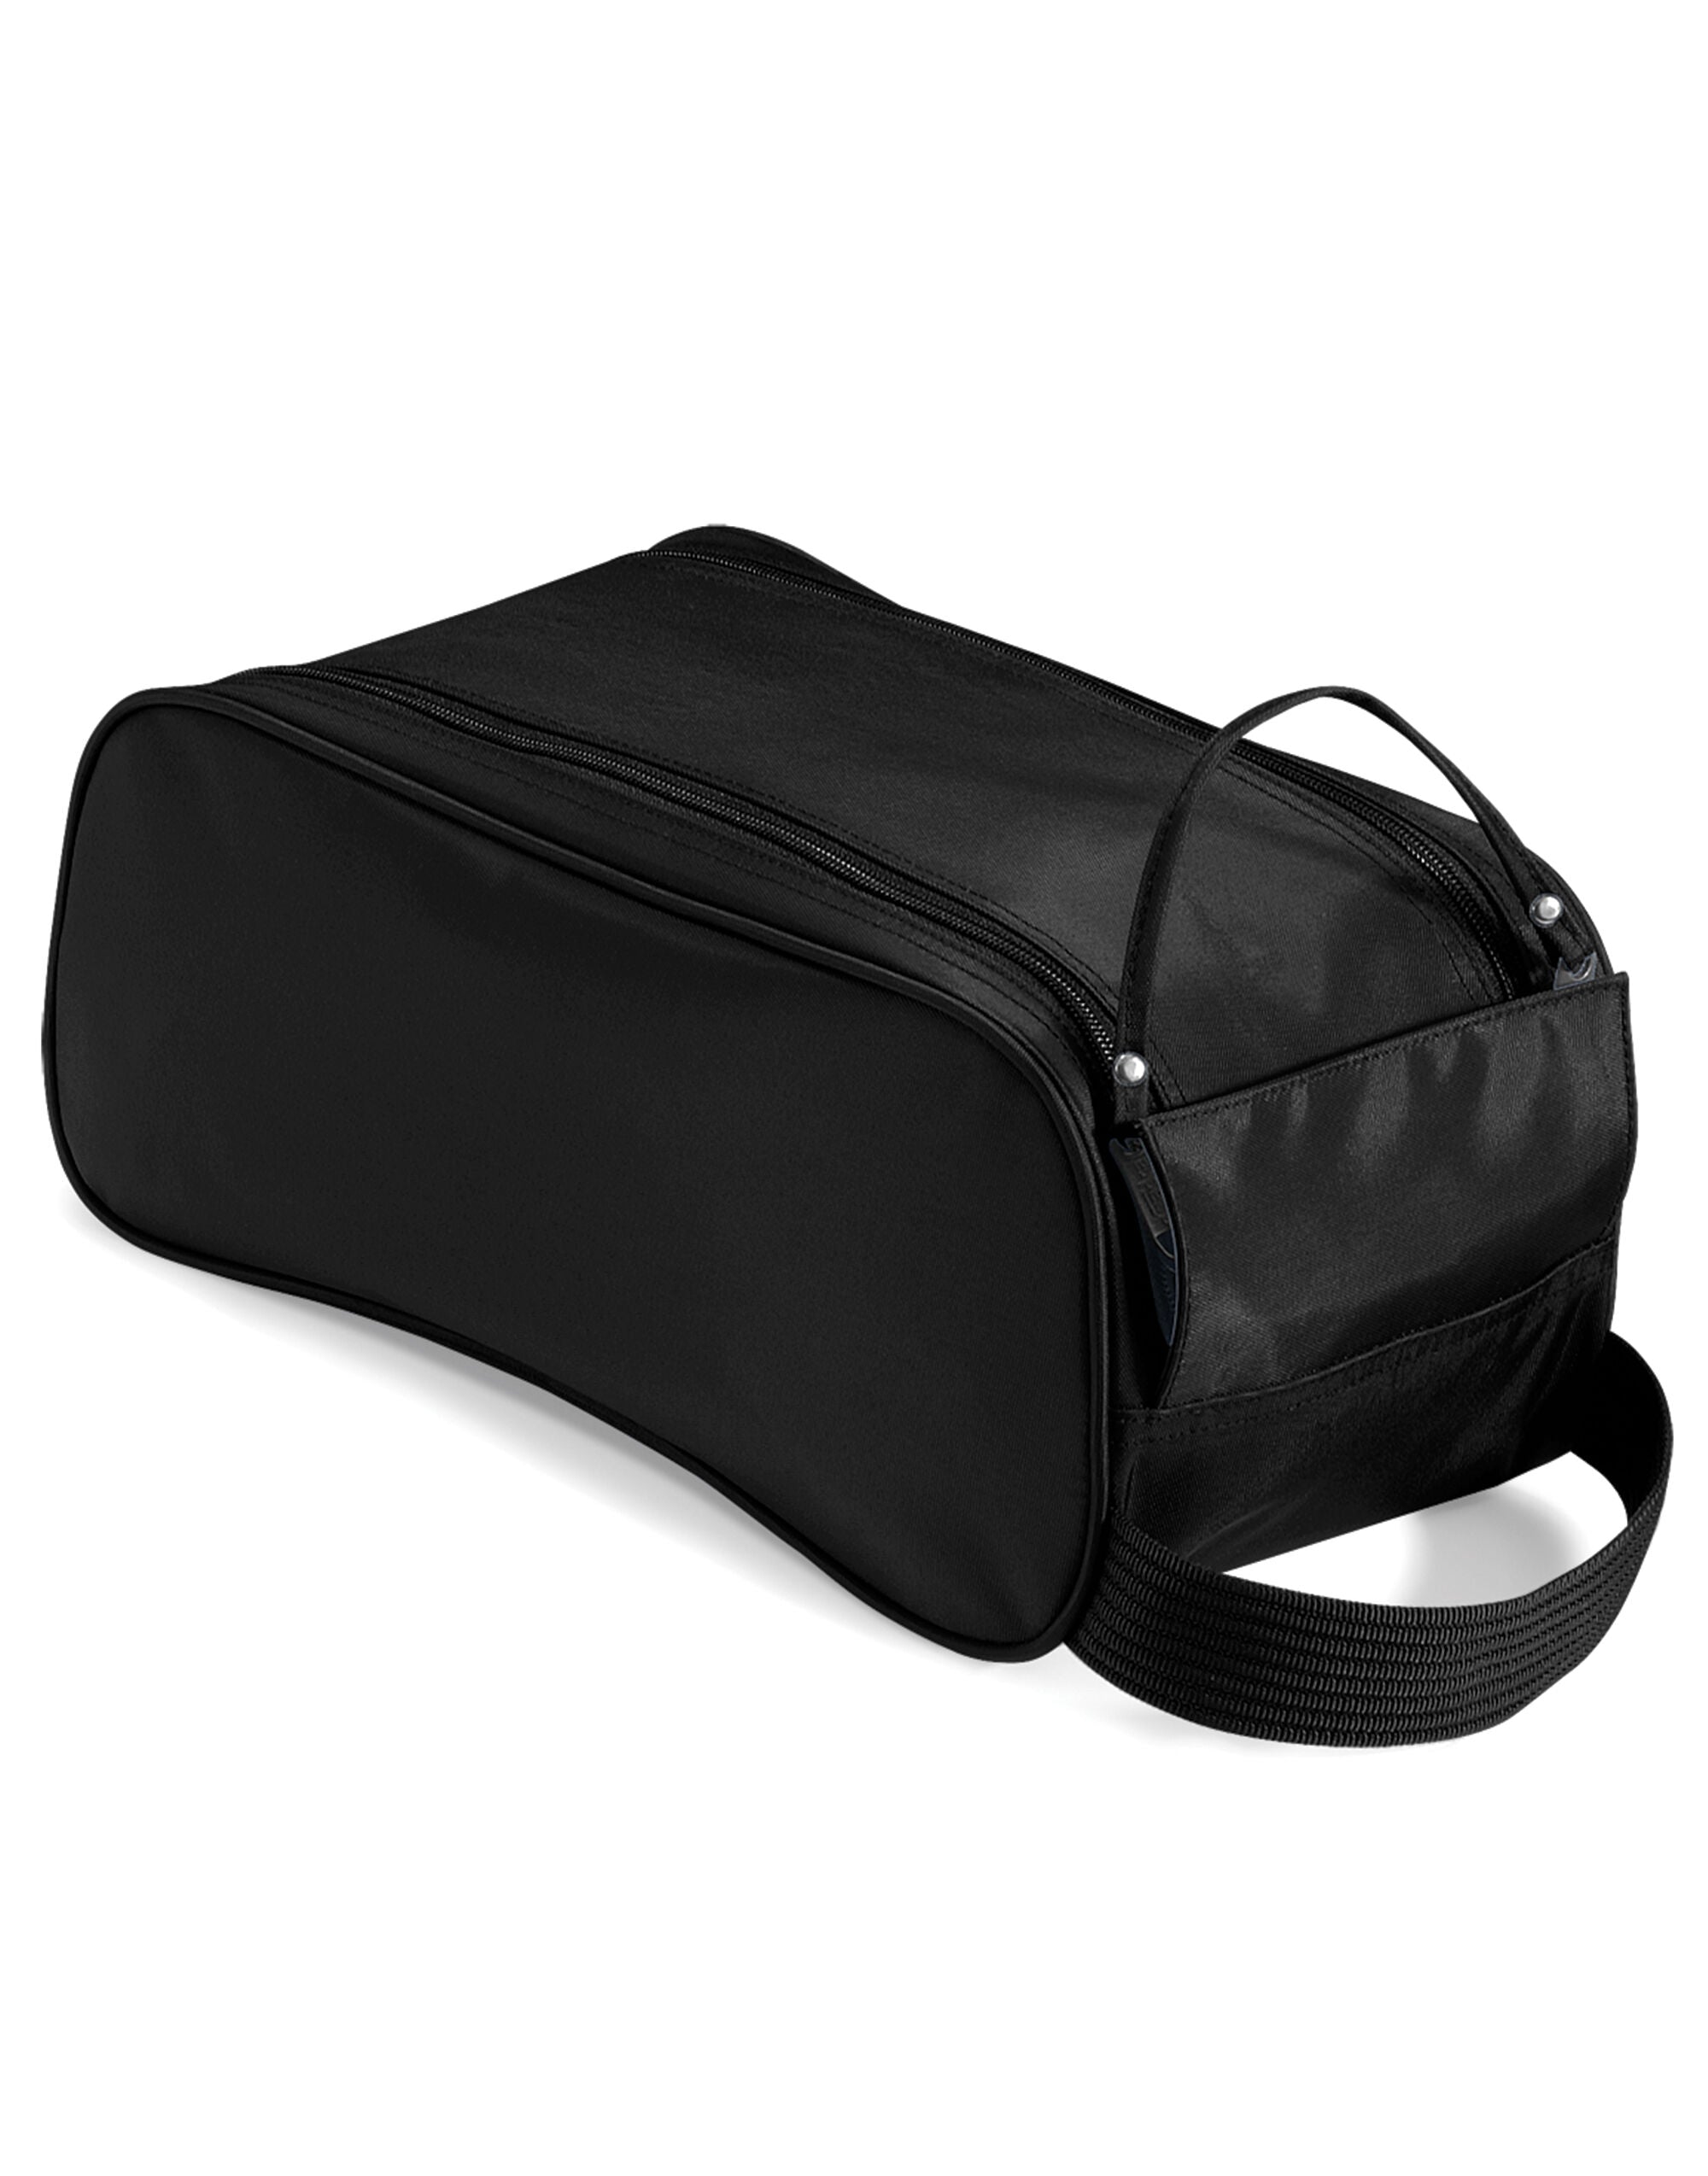 Quadra Teamwear Shoe Bag Webbing carrying handle (QD76)